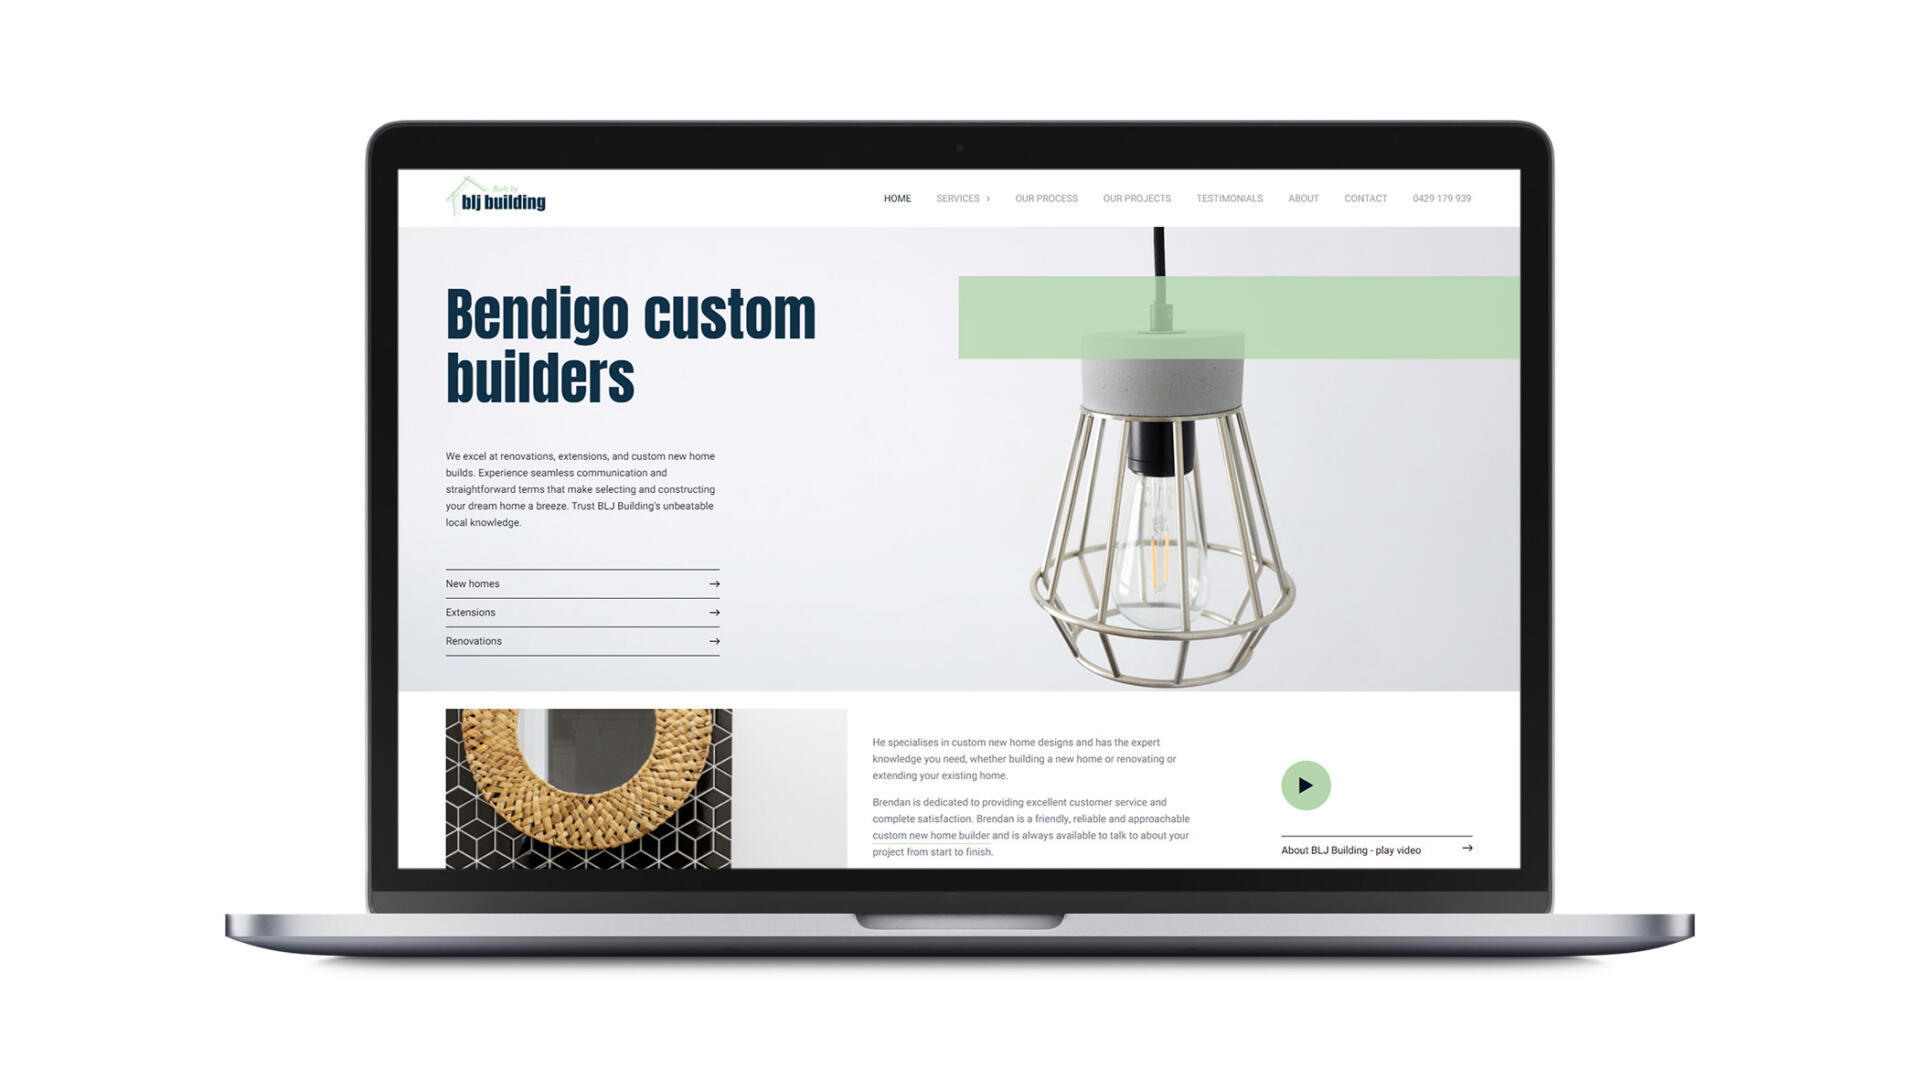 Open laptop showing custom SEO website for Bendigo business